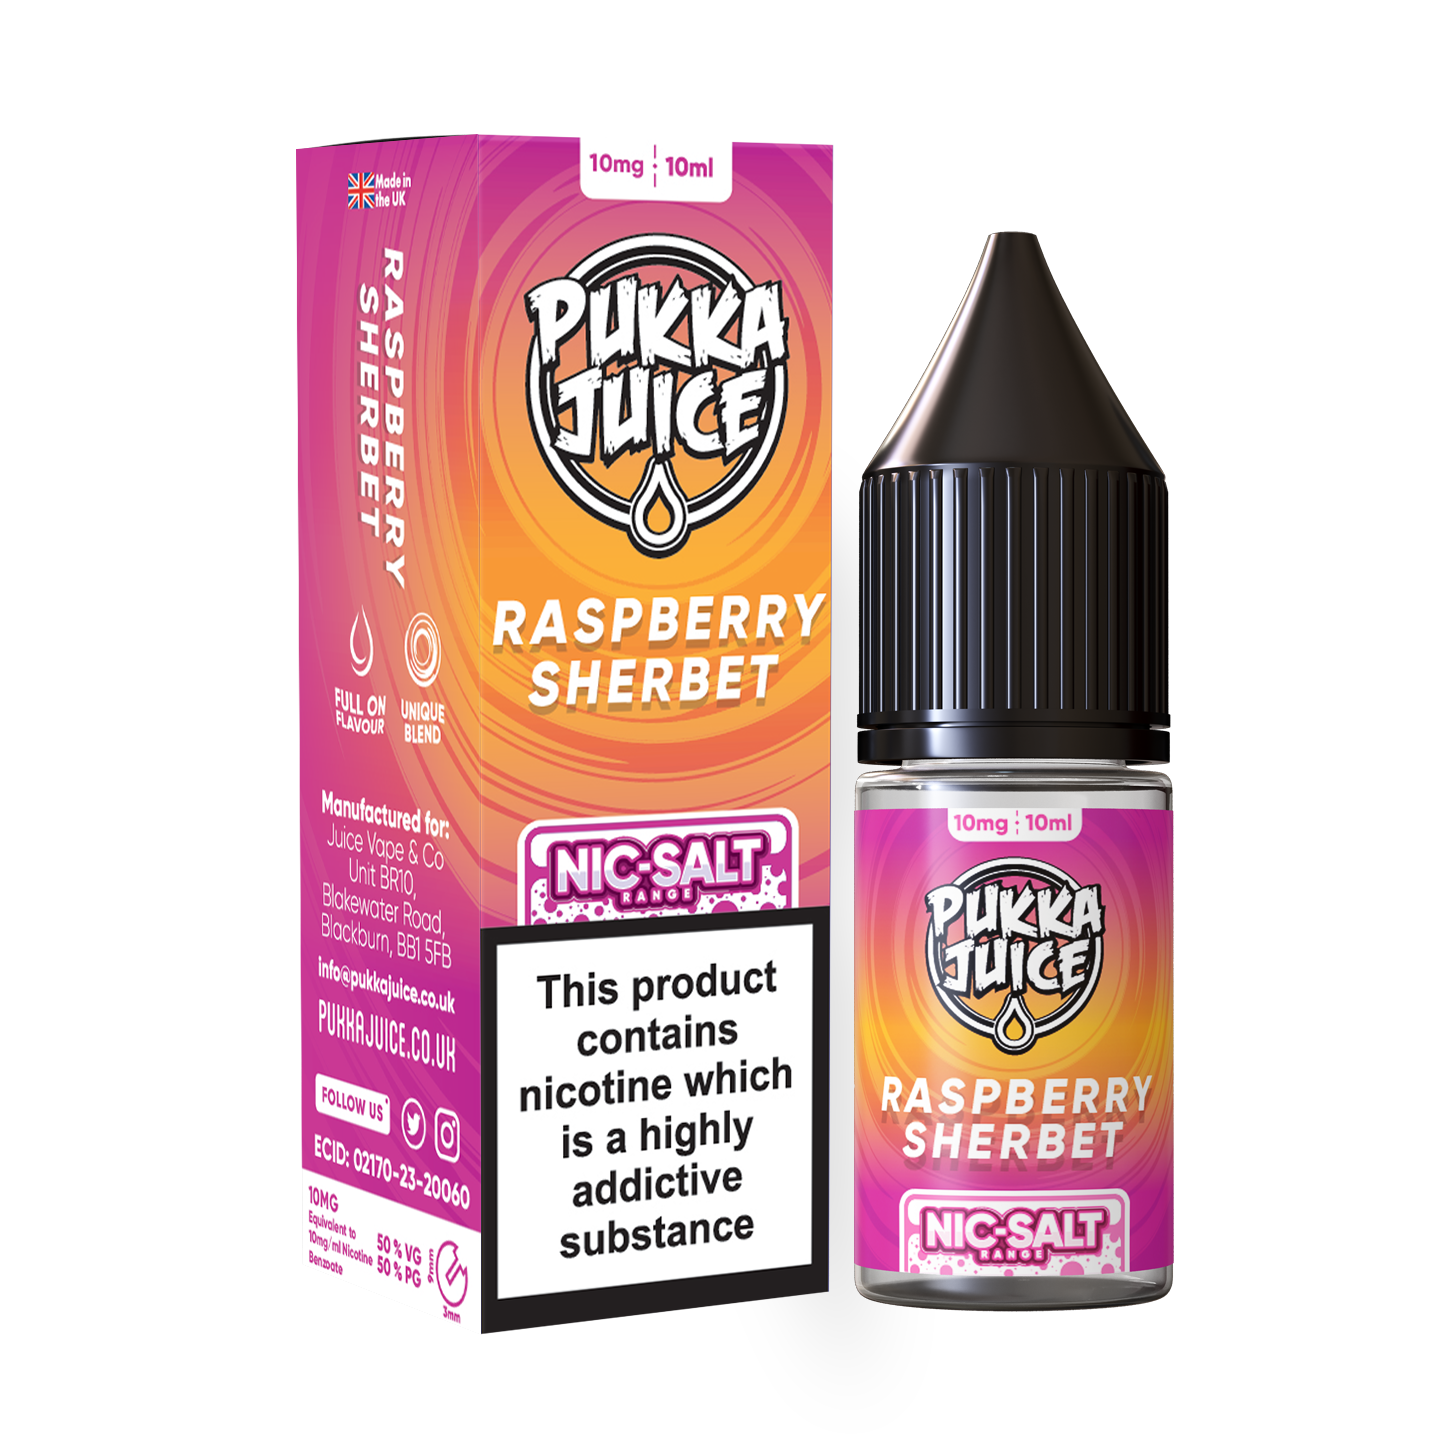 Product Image Of Raspberry Sherbet Nic Salt E-Liquid By Pukka Juice